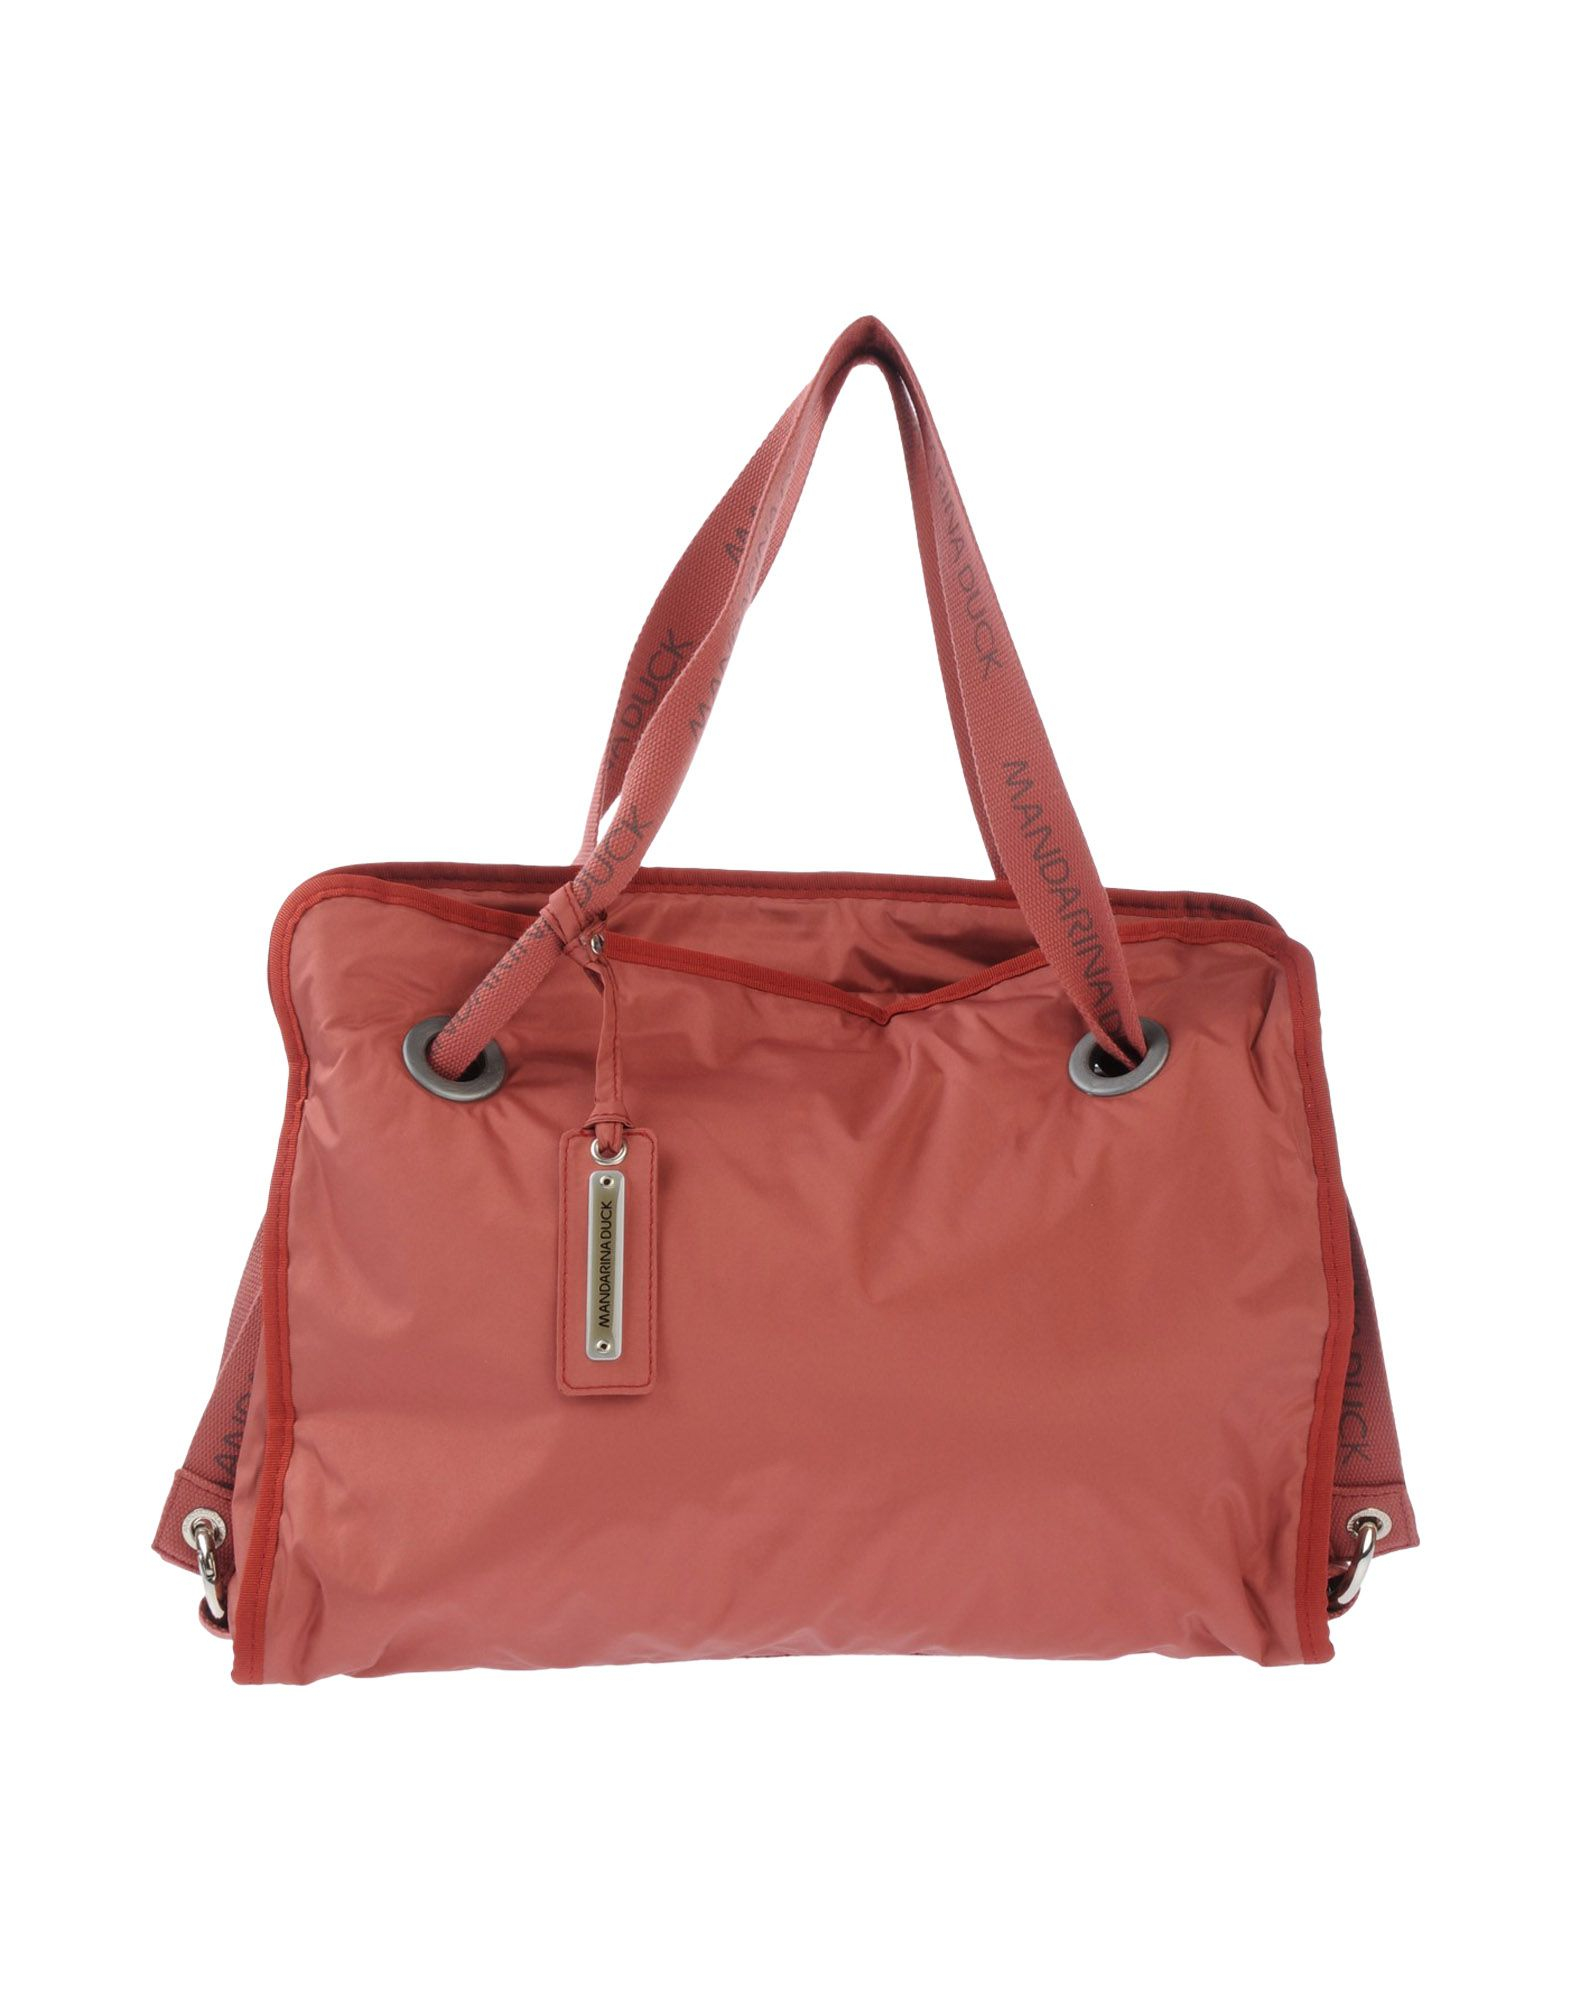 Mandarina Duck Large Fabric Bag in Red (Brick red) | Lyst